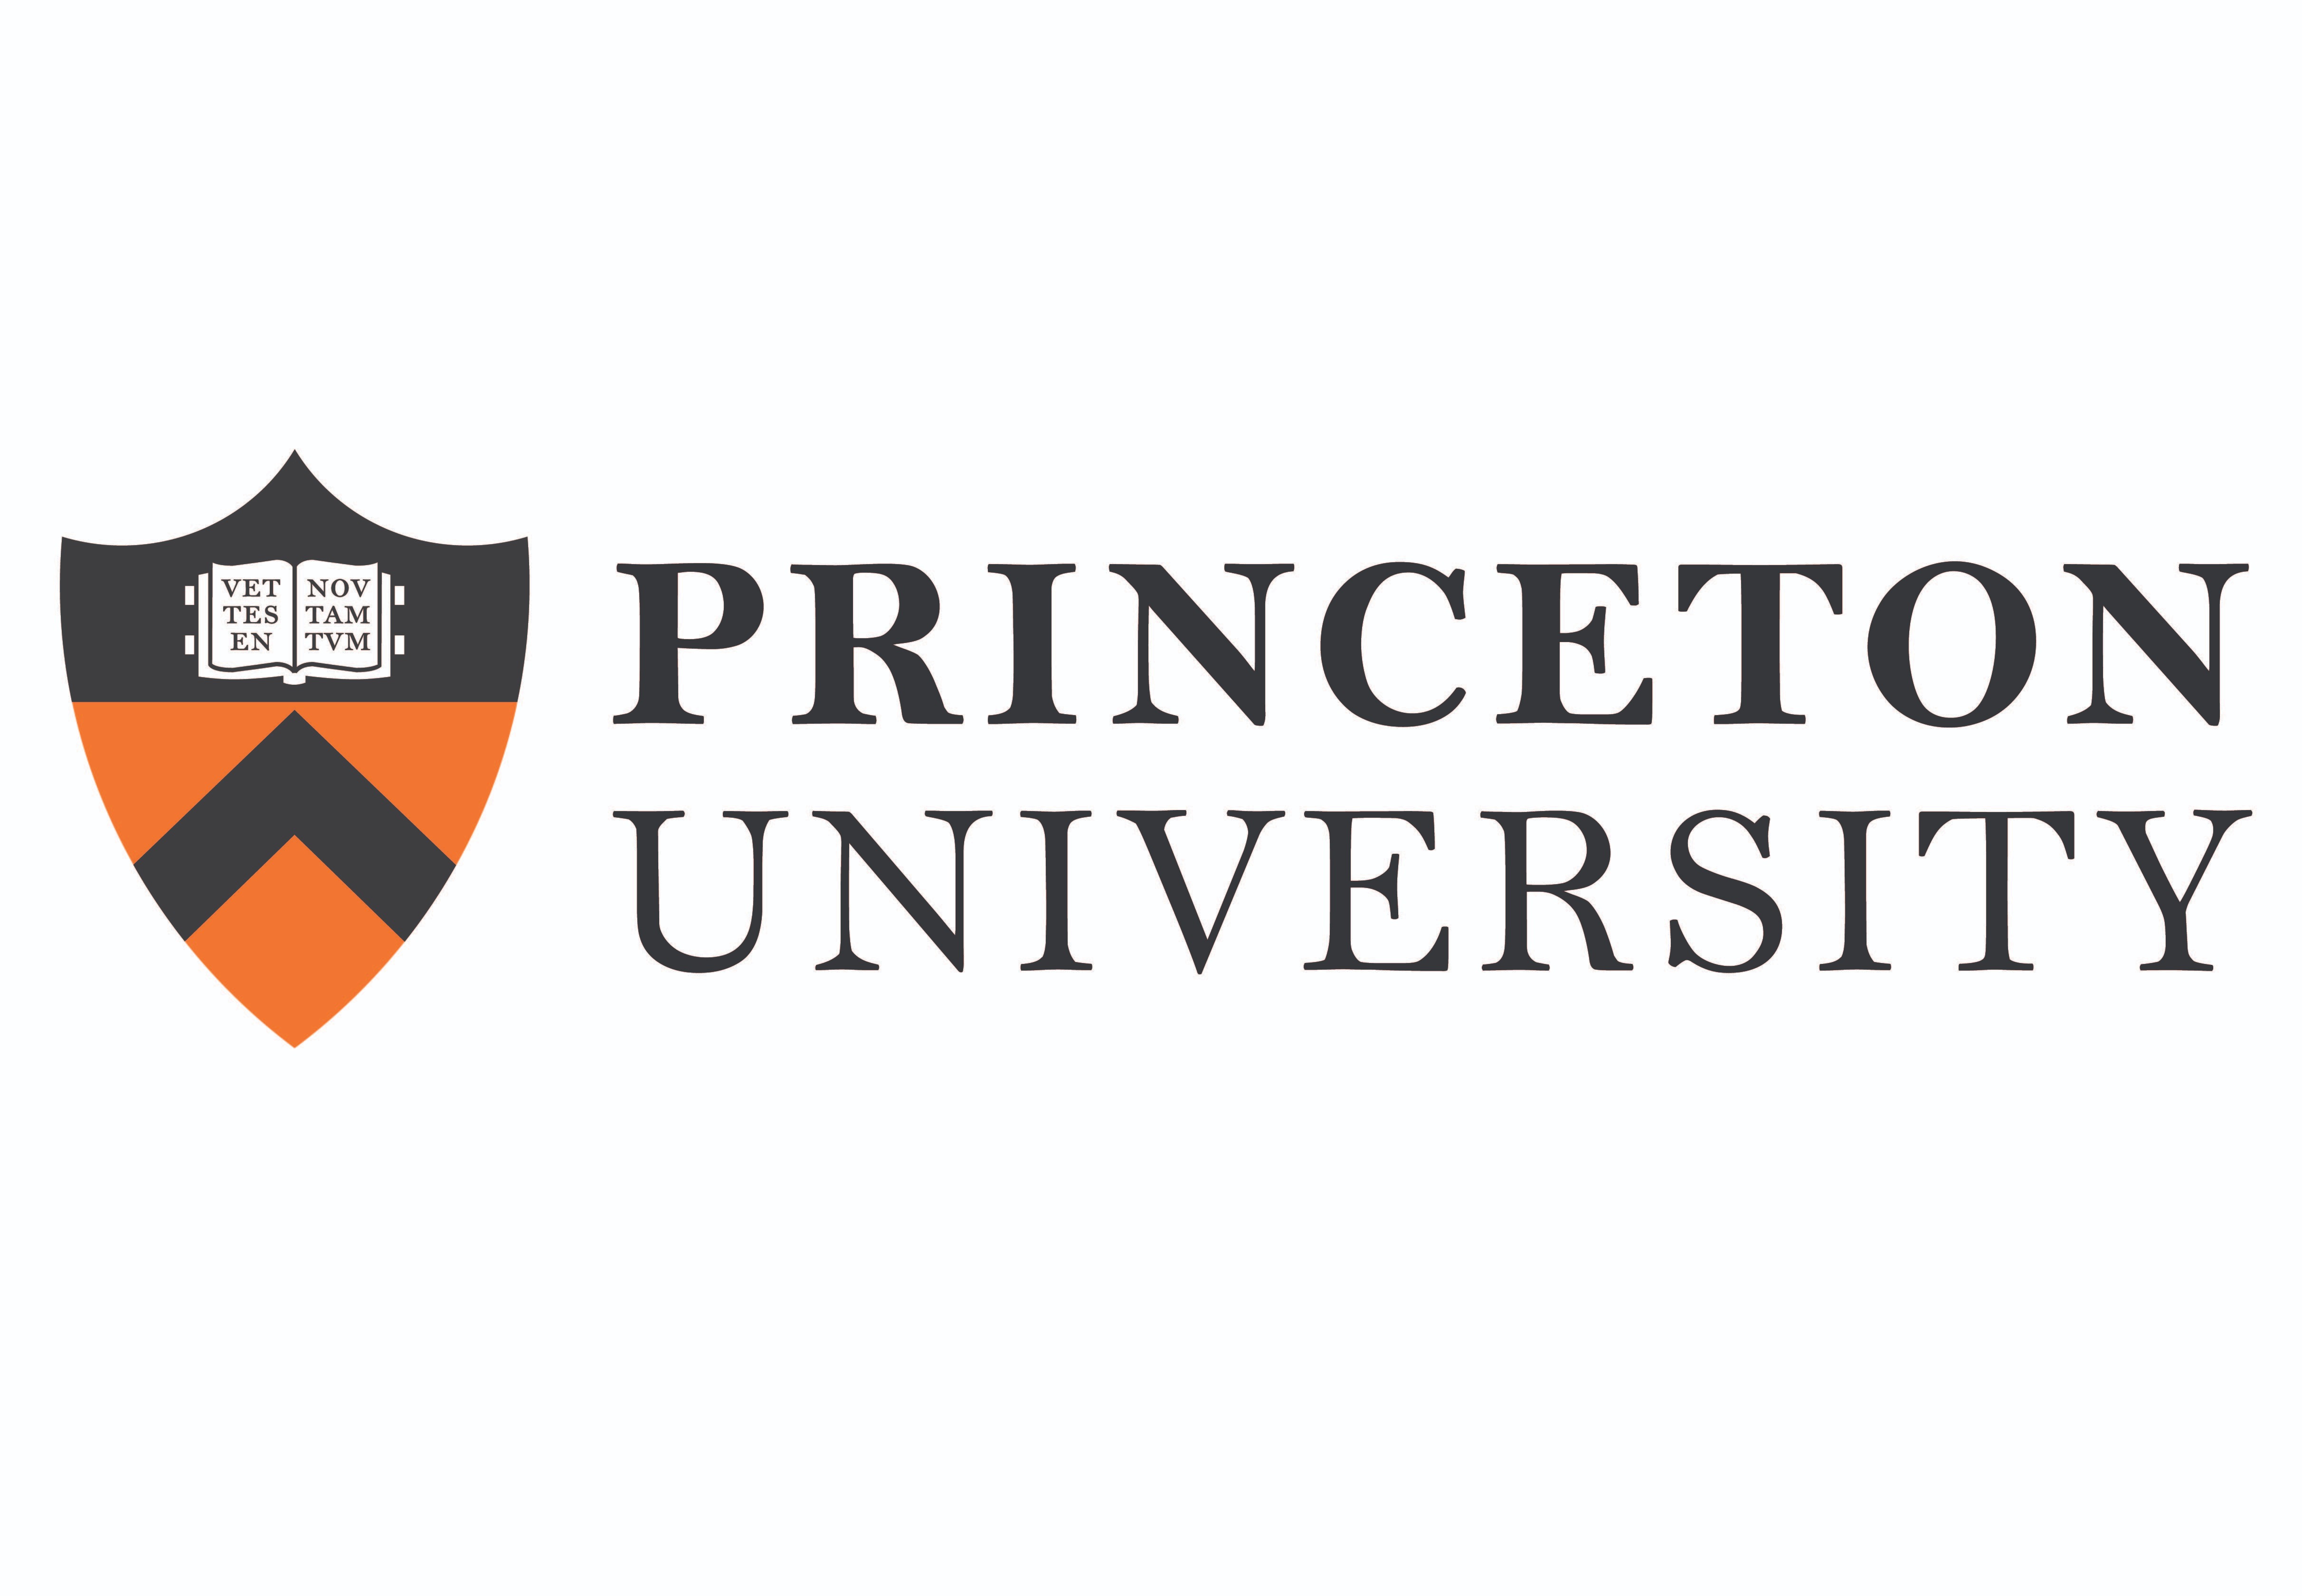 Princeton UNIVERSITY